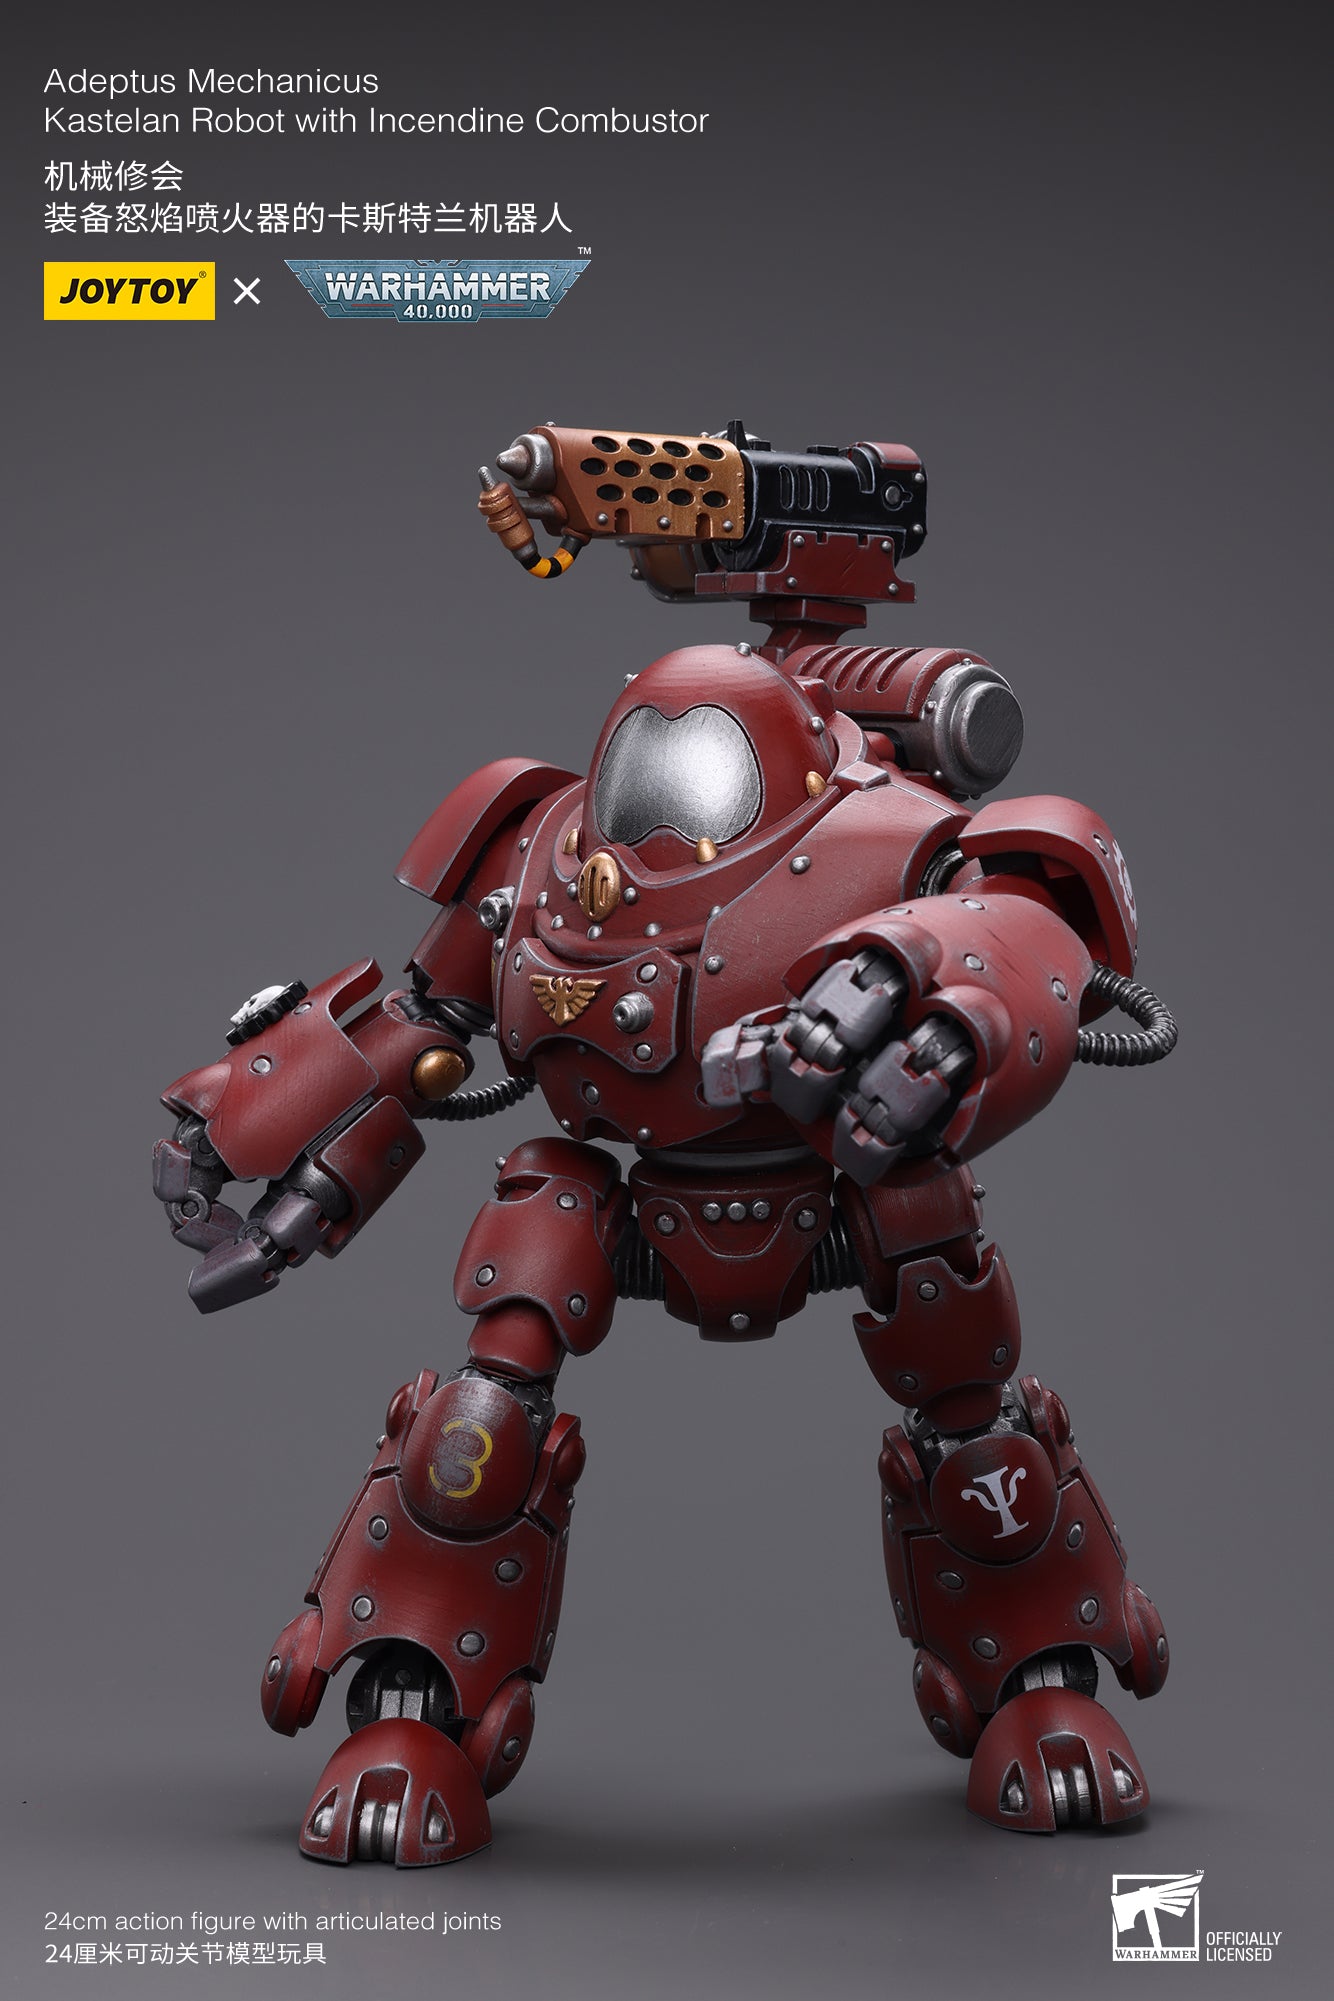 Adeptus Mechanicus Kastelan Robot with Incendine Combustor - Warhammer 40K Action Figure By JOYTOY